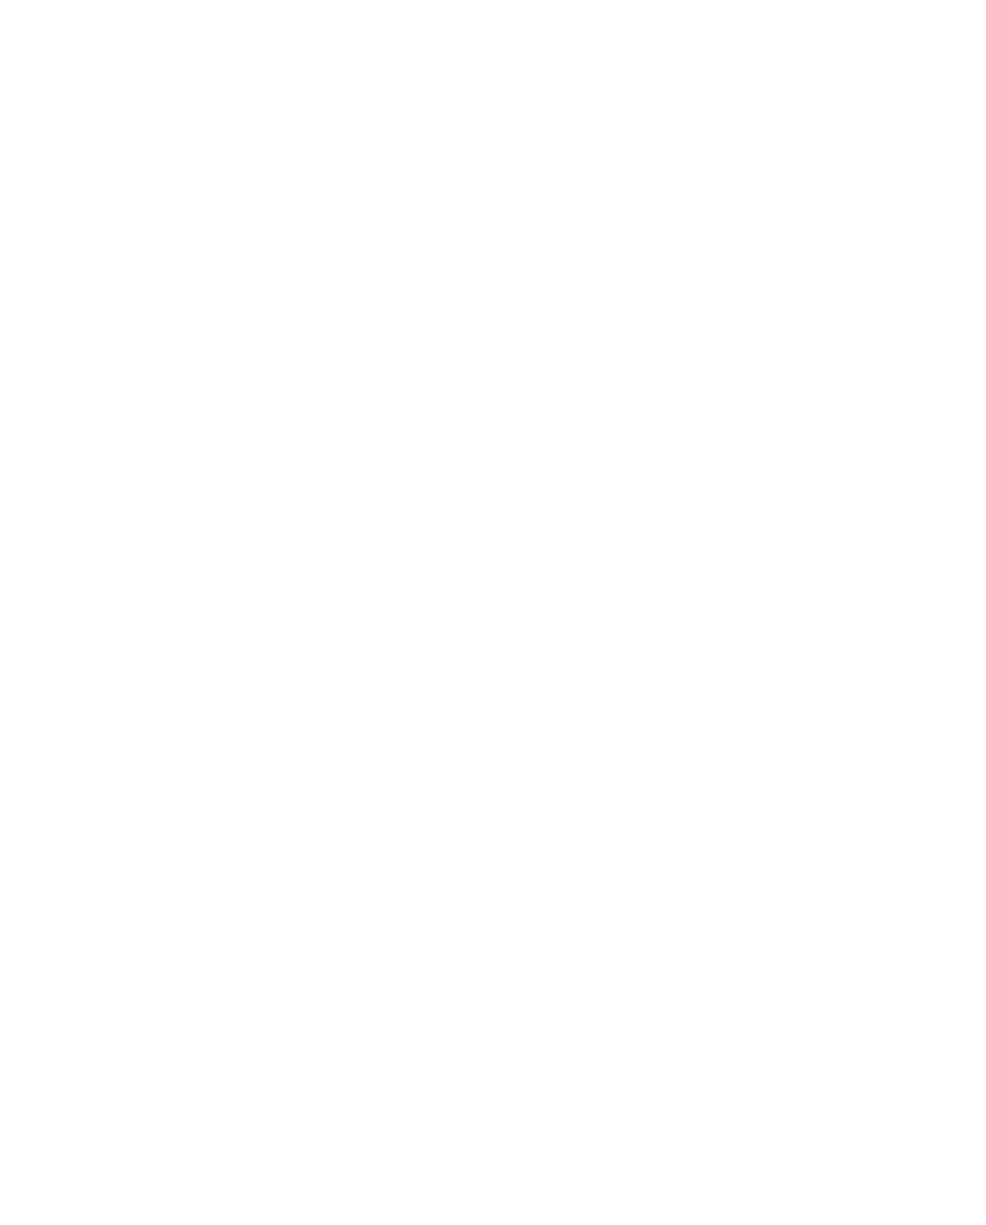 Logo van Liberty Latin America